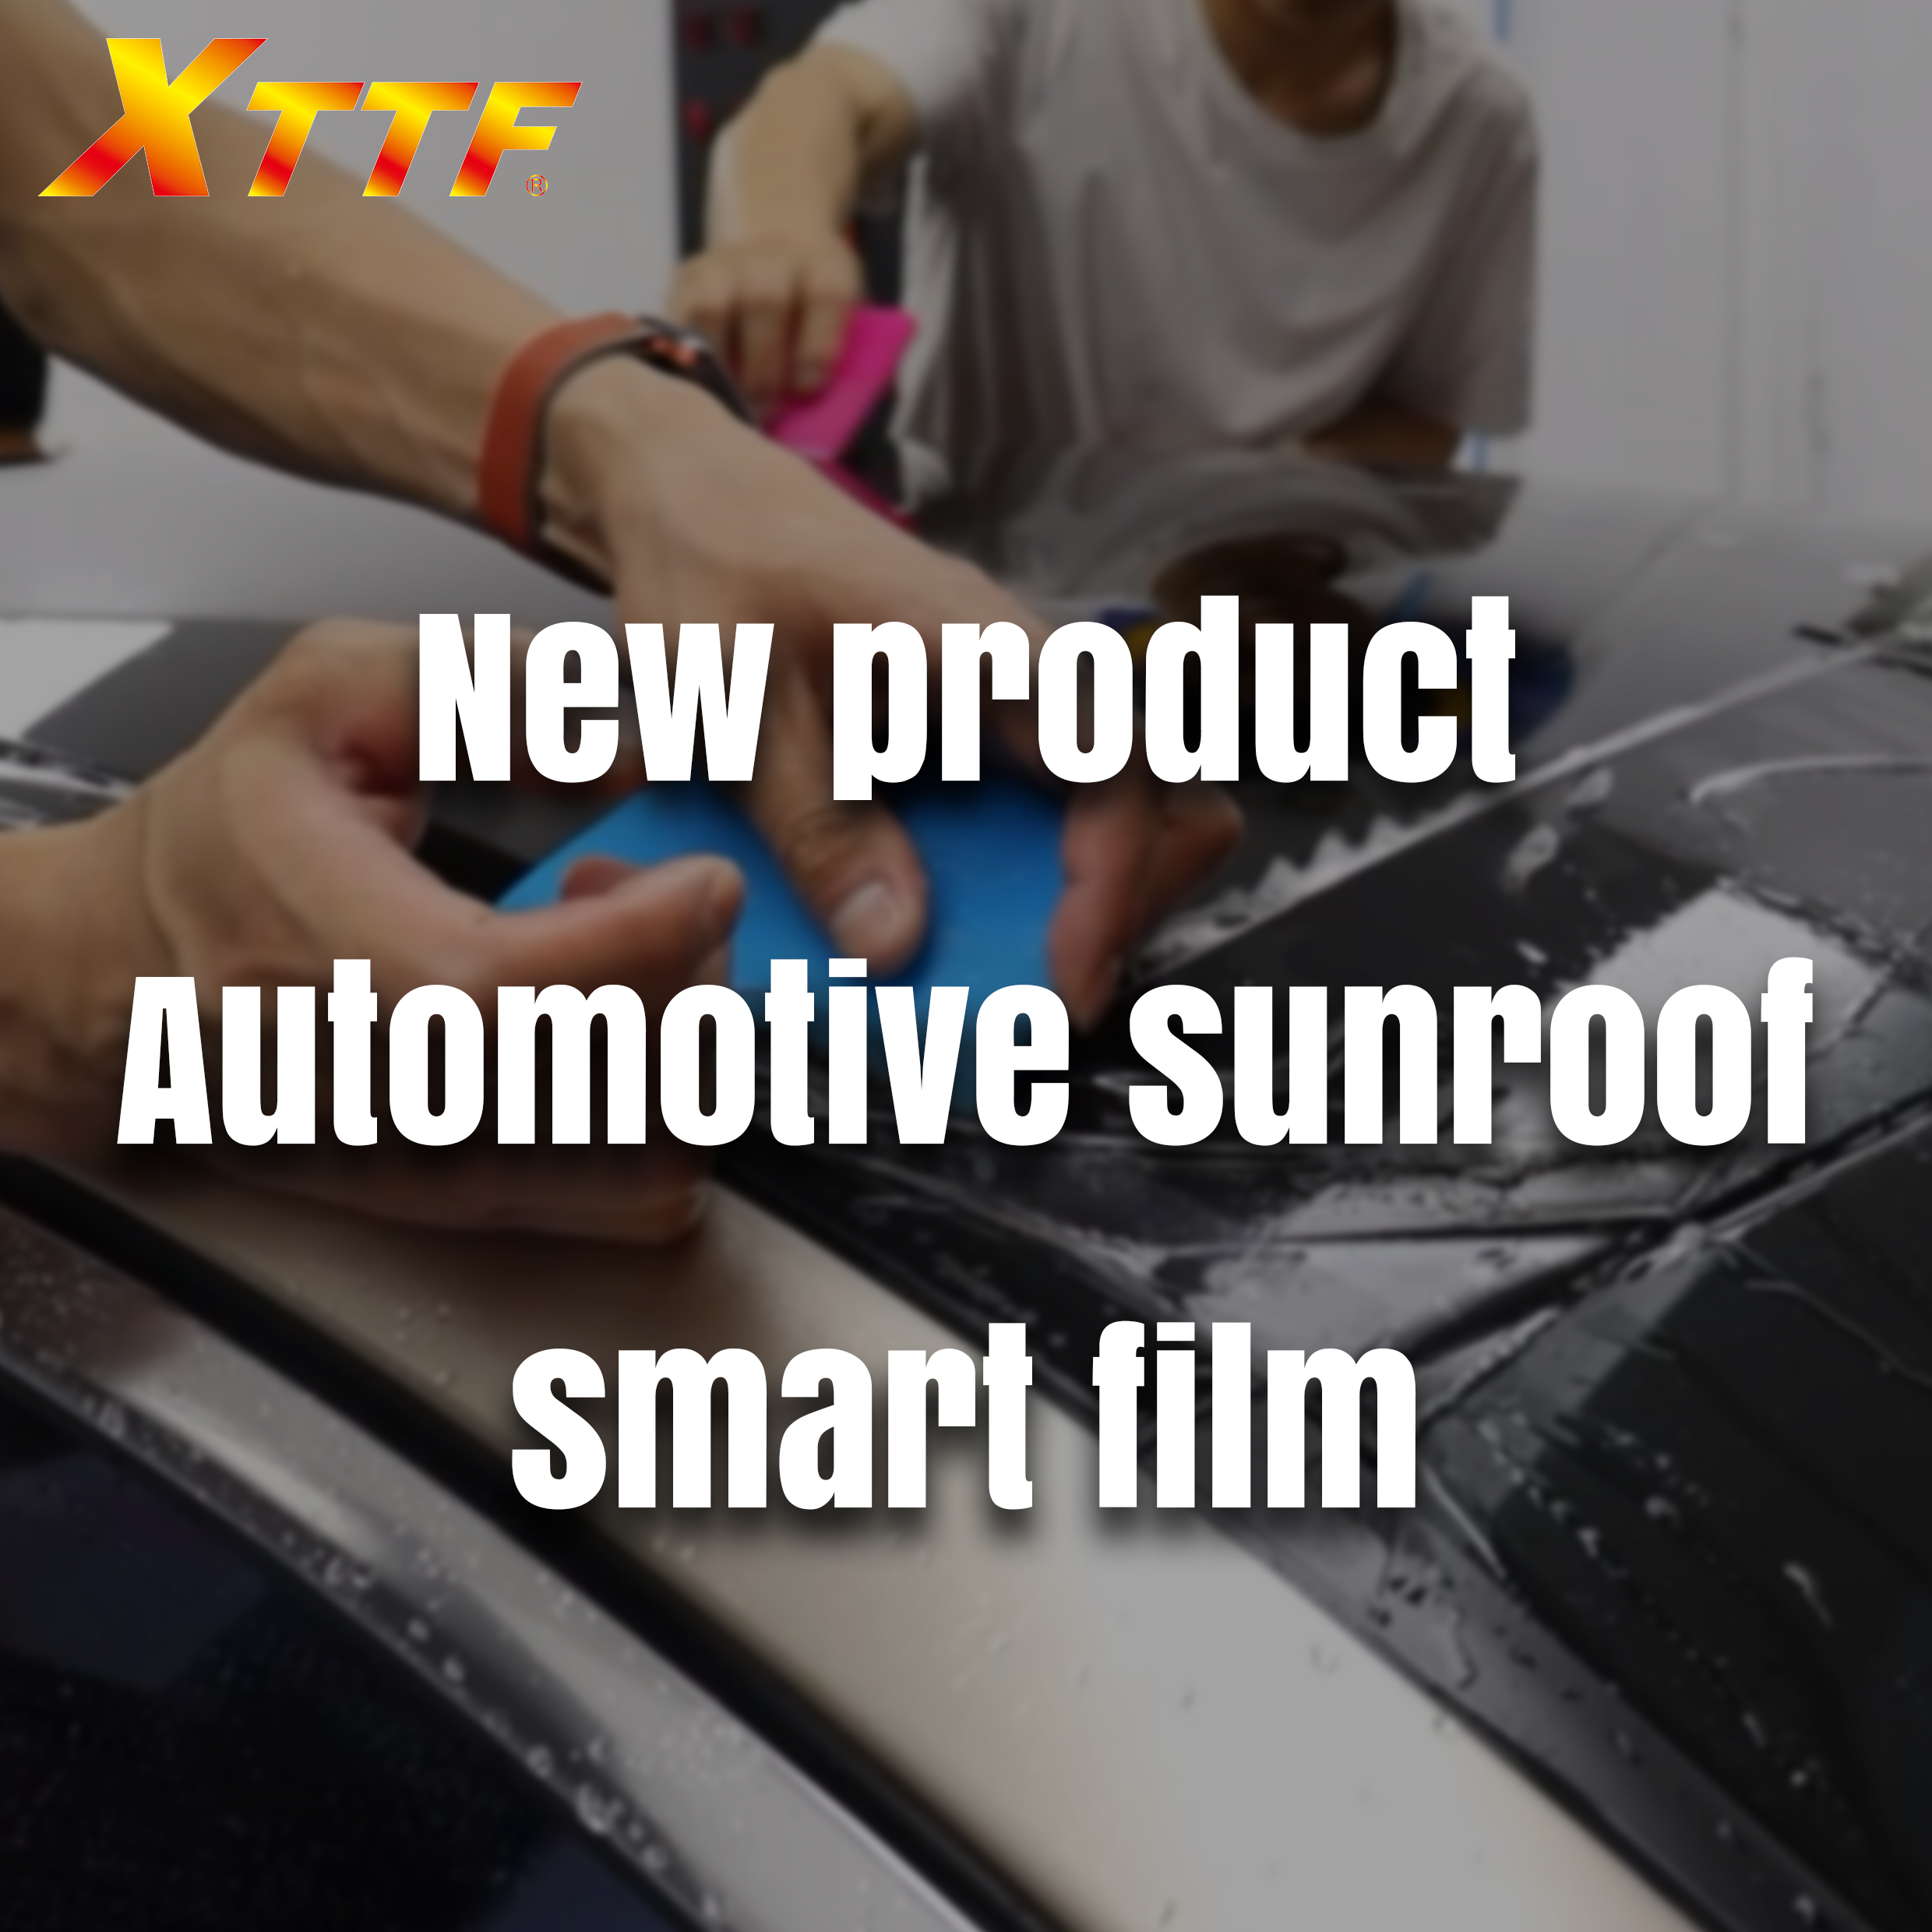 New product-Automotive sunroof smart film